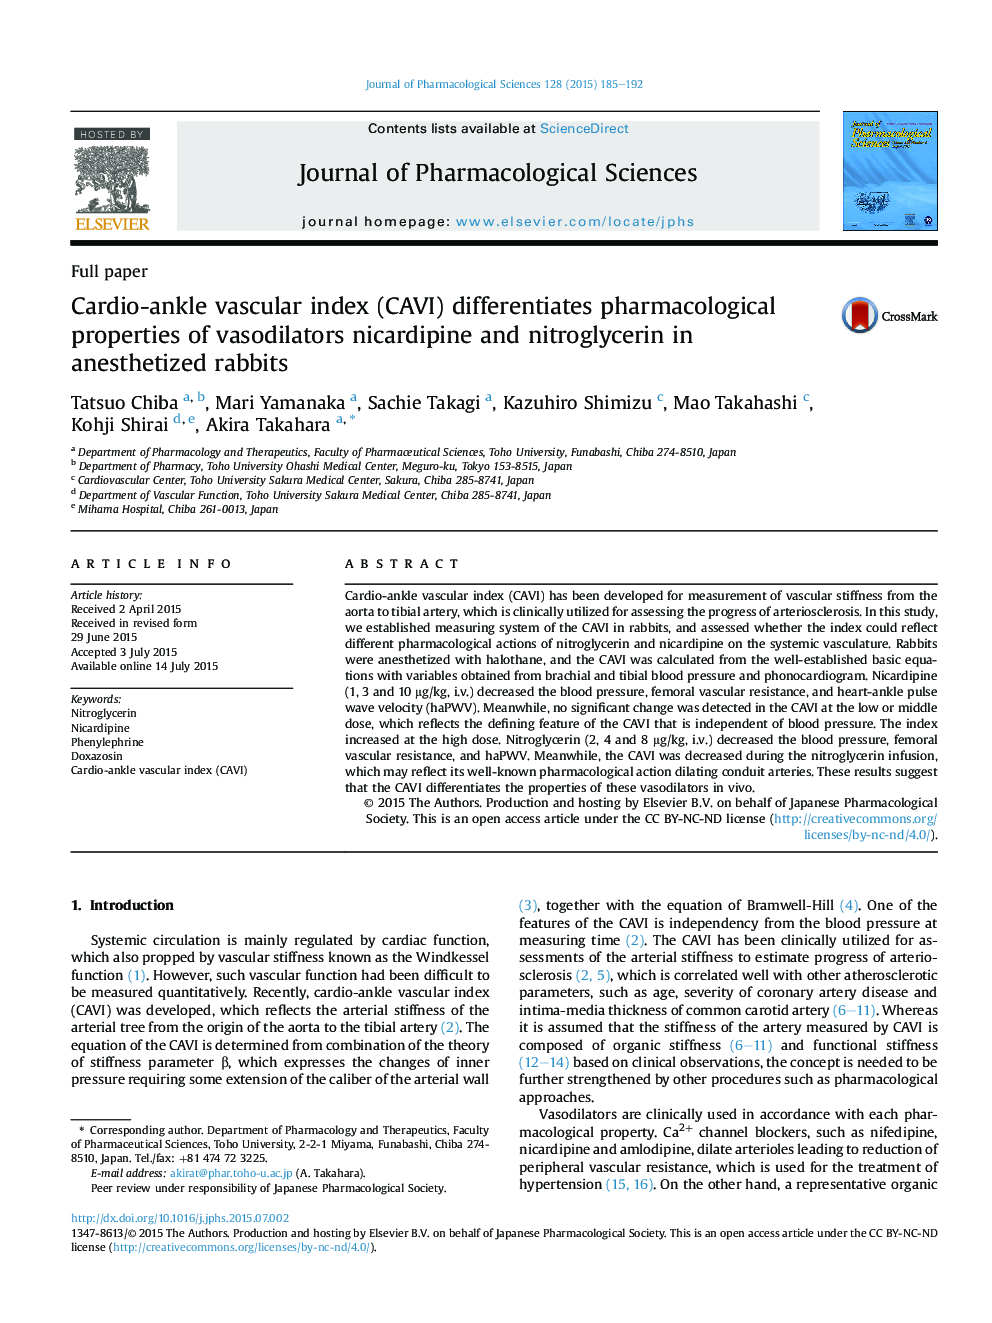 Cardio-ankle vascular index (CAVI) differentiates pharmacological properties of vasodilators nicardipine and nitroglycerin in anesthetized rabbits 